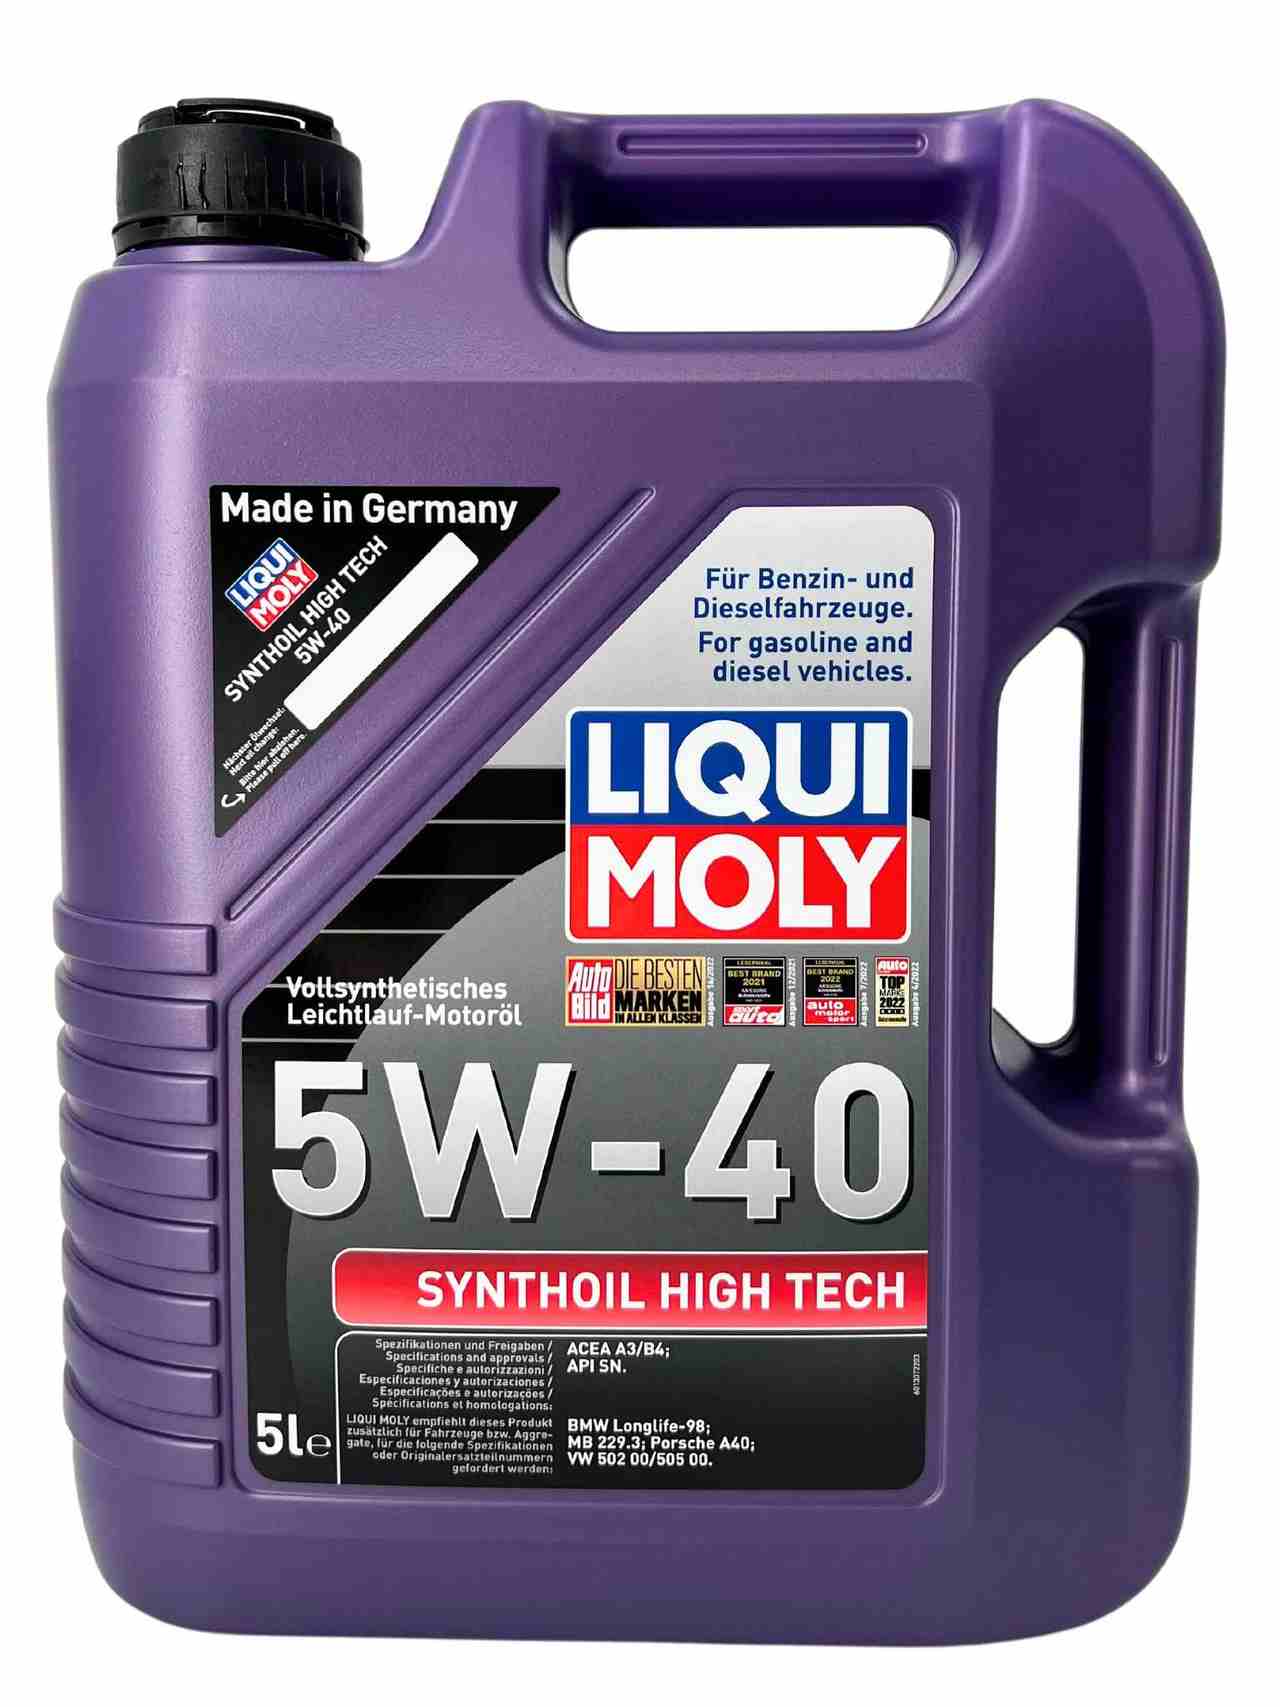 Liqui Moly Synthoil High Tech 5W-40 5 Liter